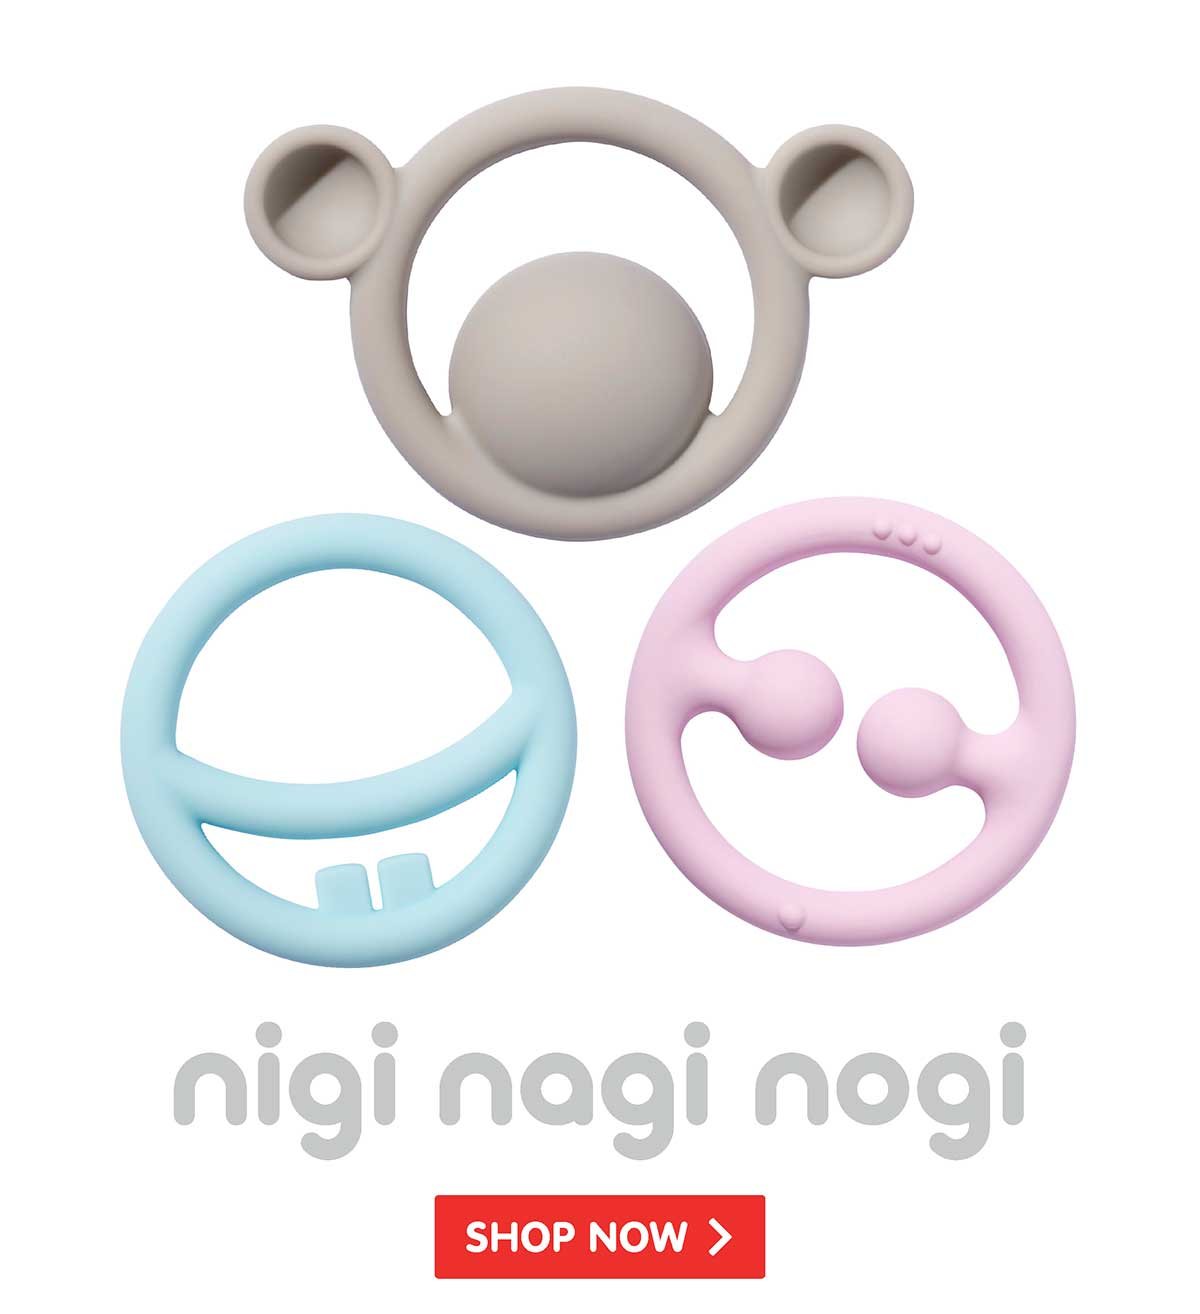 Nigi Nagi and Nogi Teething Rings by MOLUK